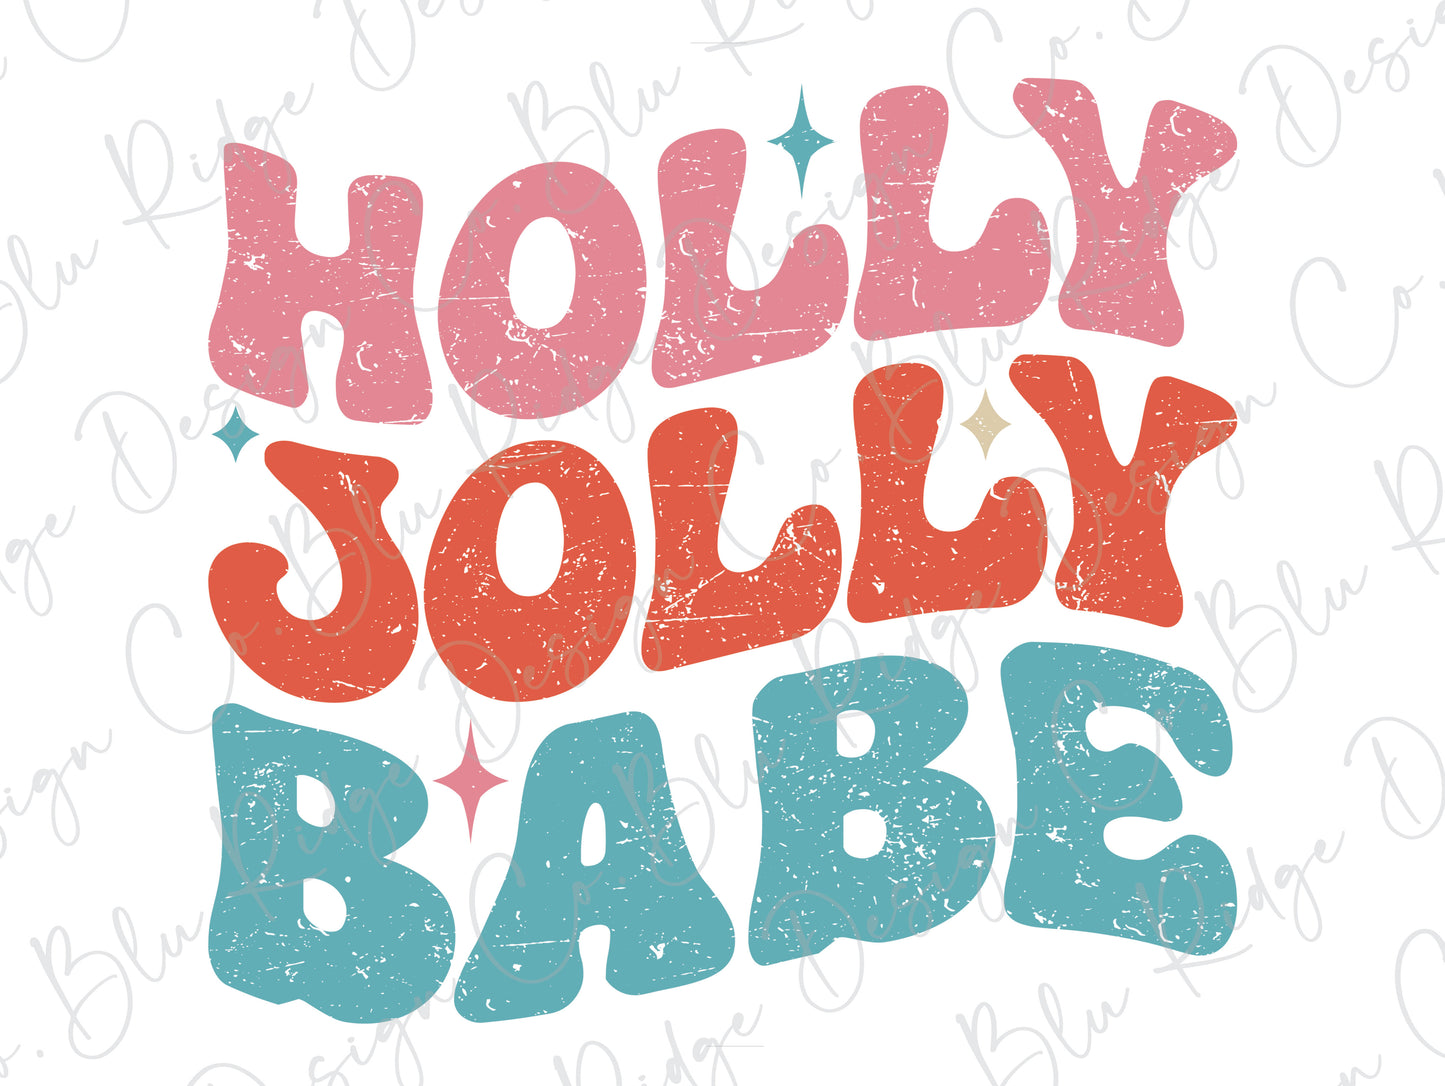 Holly Jolly Babe Boho Direct To Film (DTF) Transfer